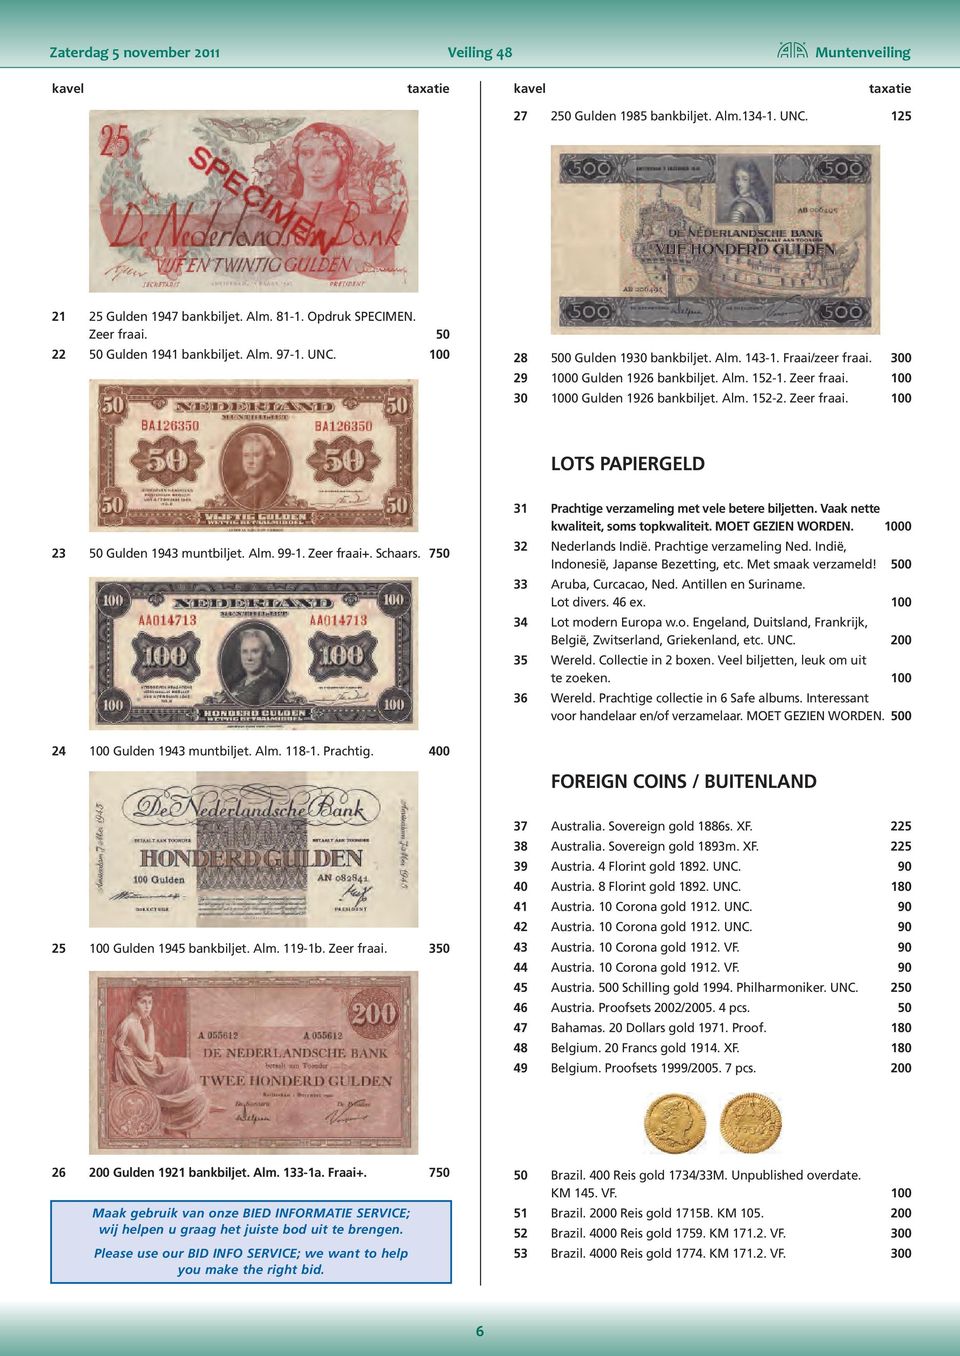 100 30 1000 Gulden 1926 bankbiljet. Alm. 152-2. Zeer fraai. 100 LOTS PAPIERGELD 23 50 Gulden 1943 muntbiljet. Alm. 99-1. Zeer fraai+. Schaars. 750 31 Prachtige verzameling met vele betere biljetten.